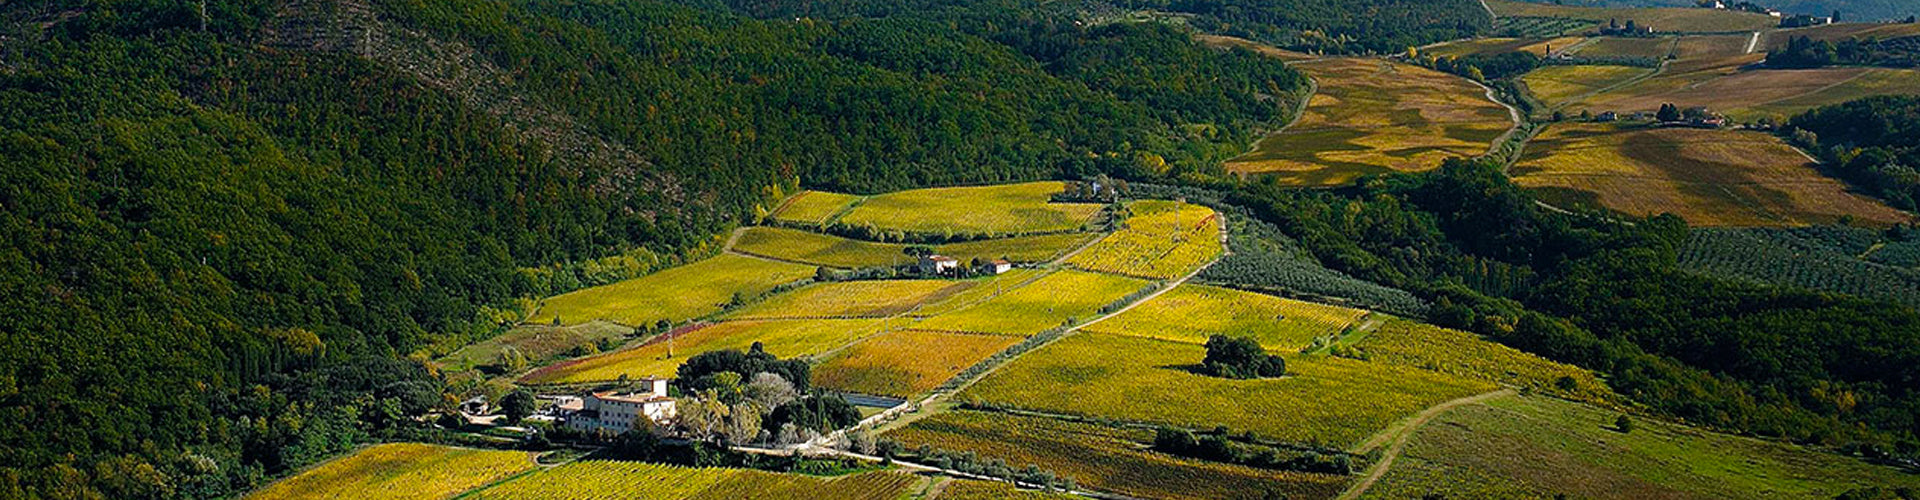 Selvapiana Winery in the Chianti Rufina region